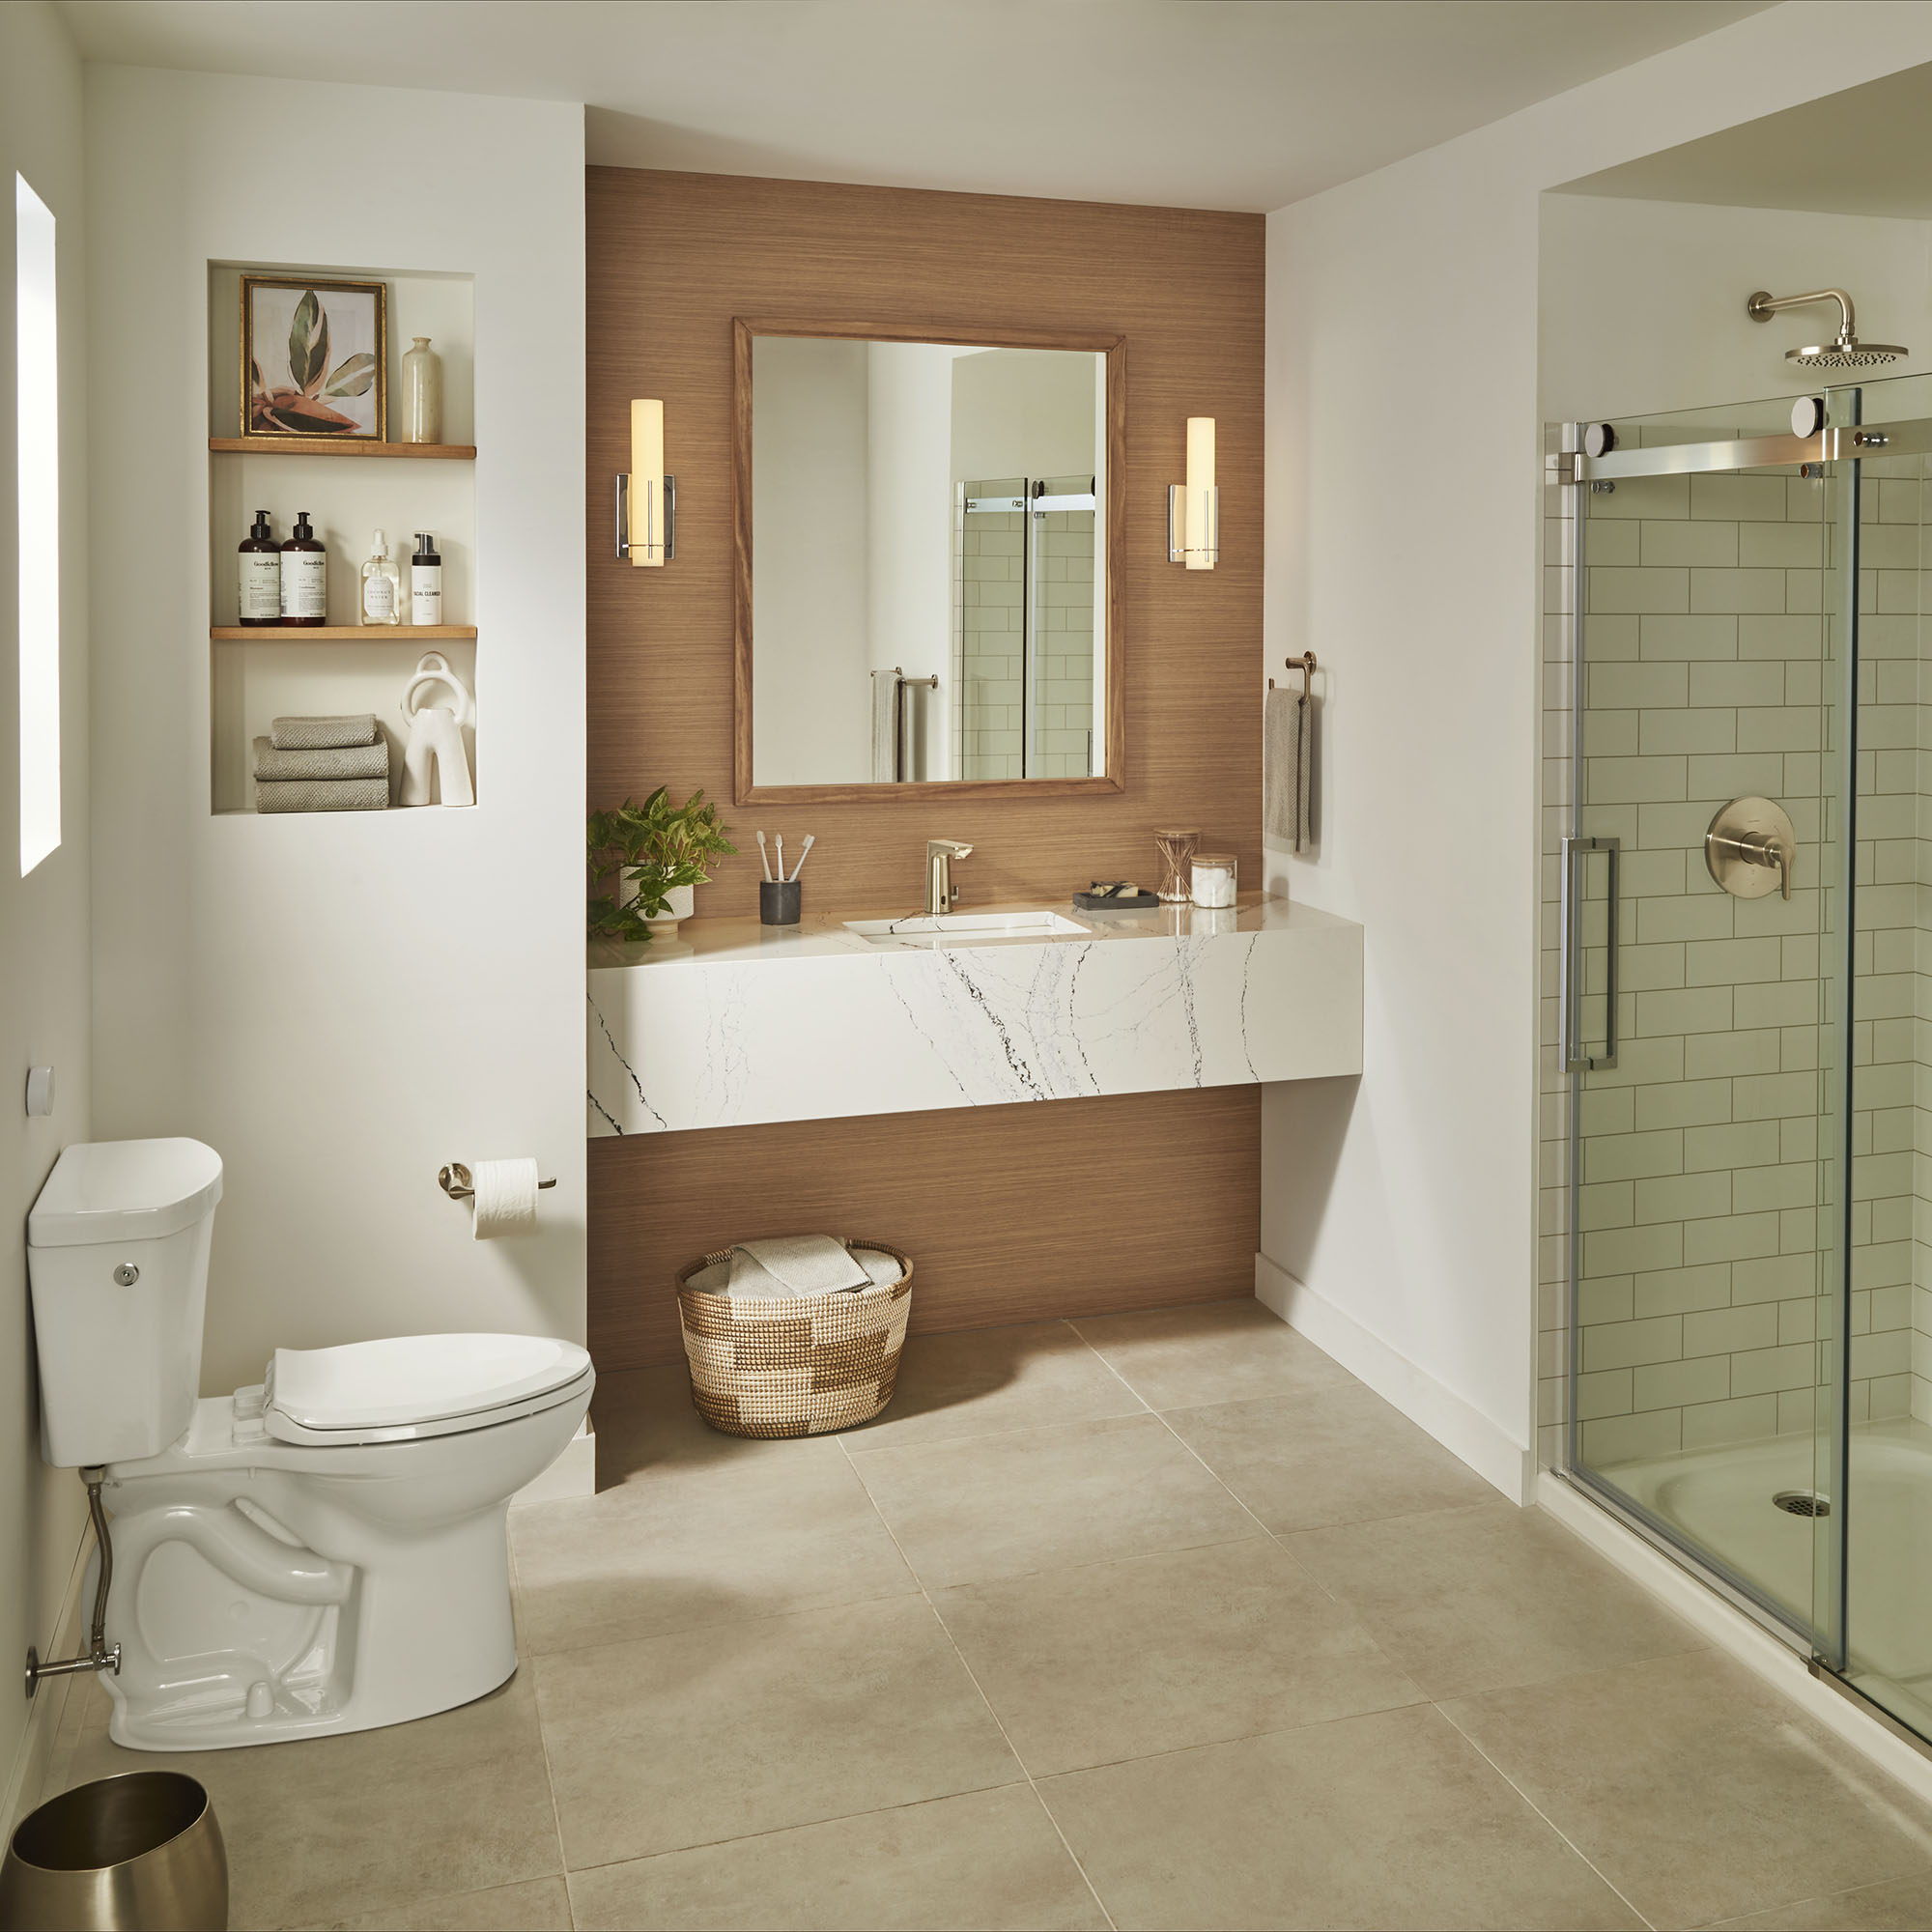 580 Showers/Bathrooms ideas  bathroom inspiration, bathroom